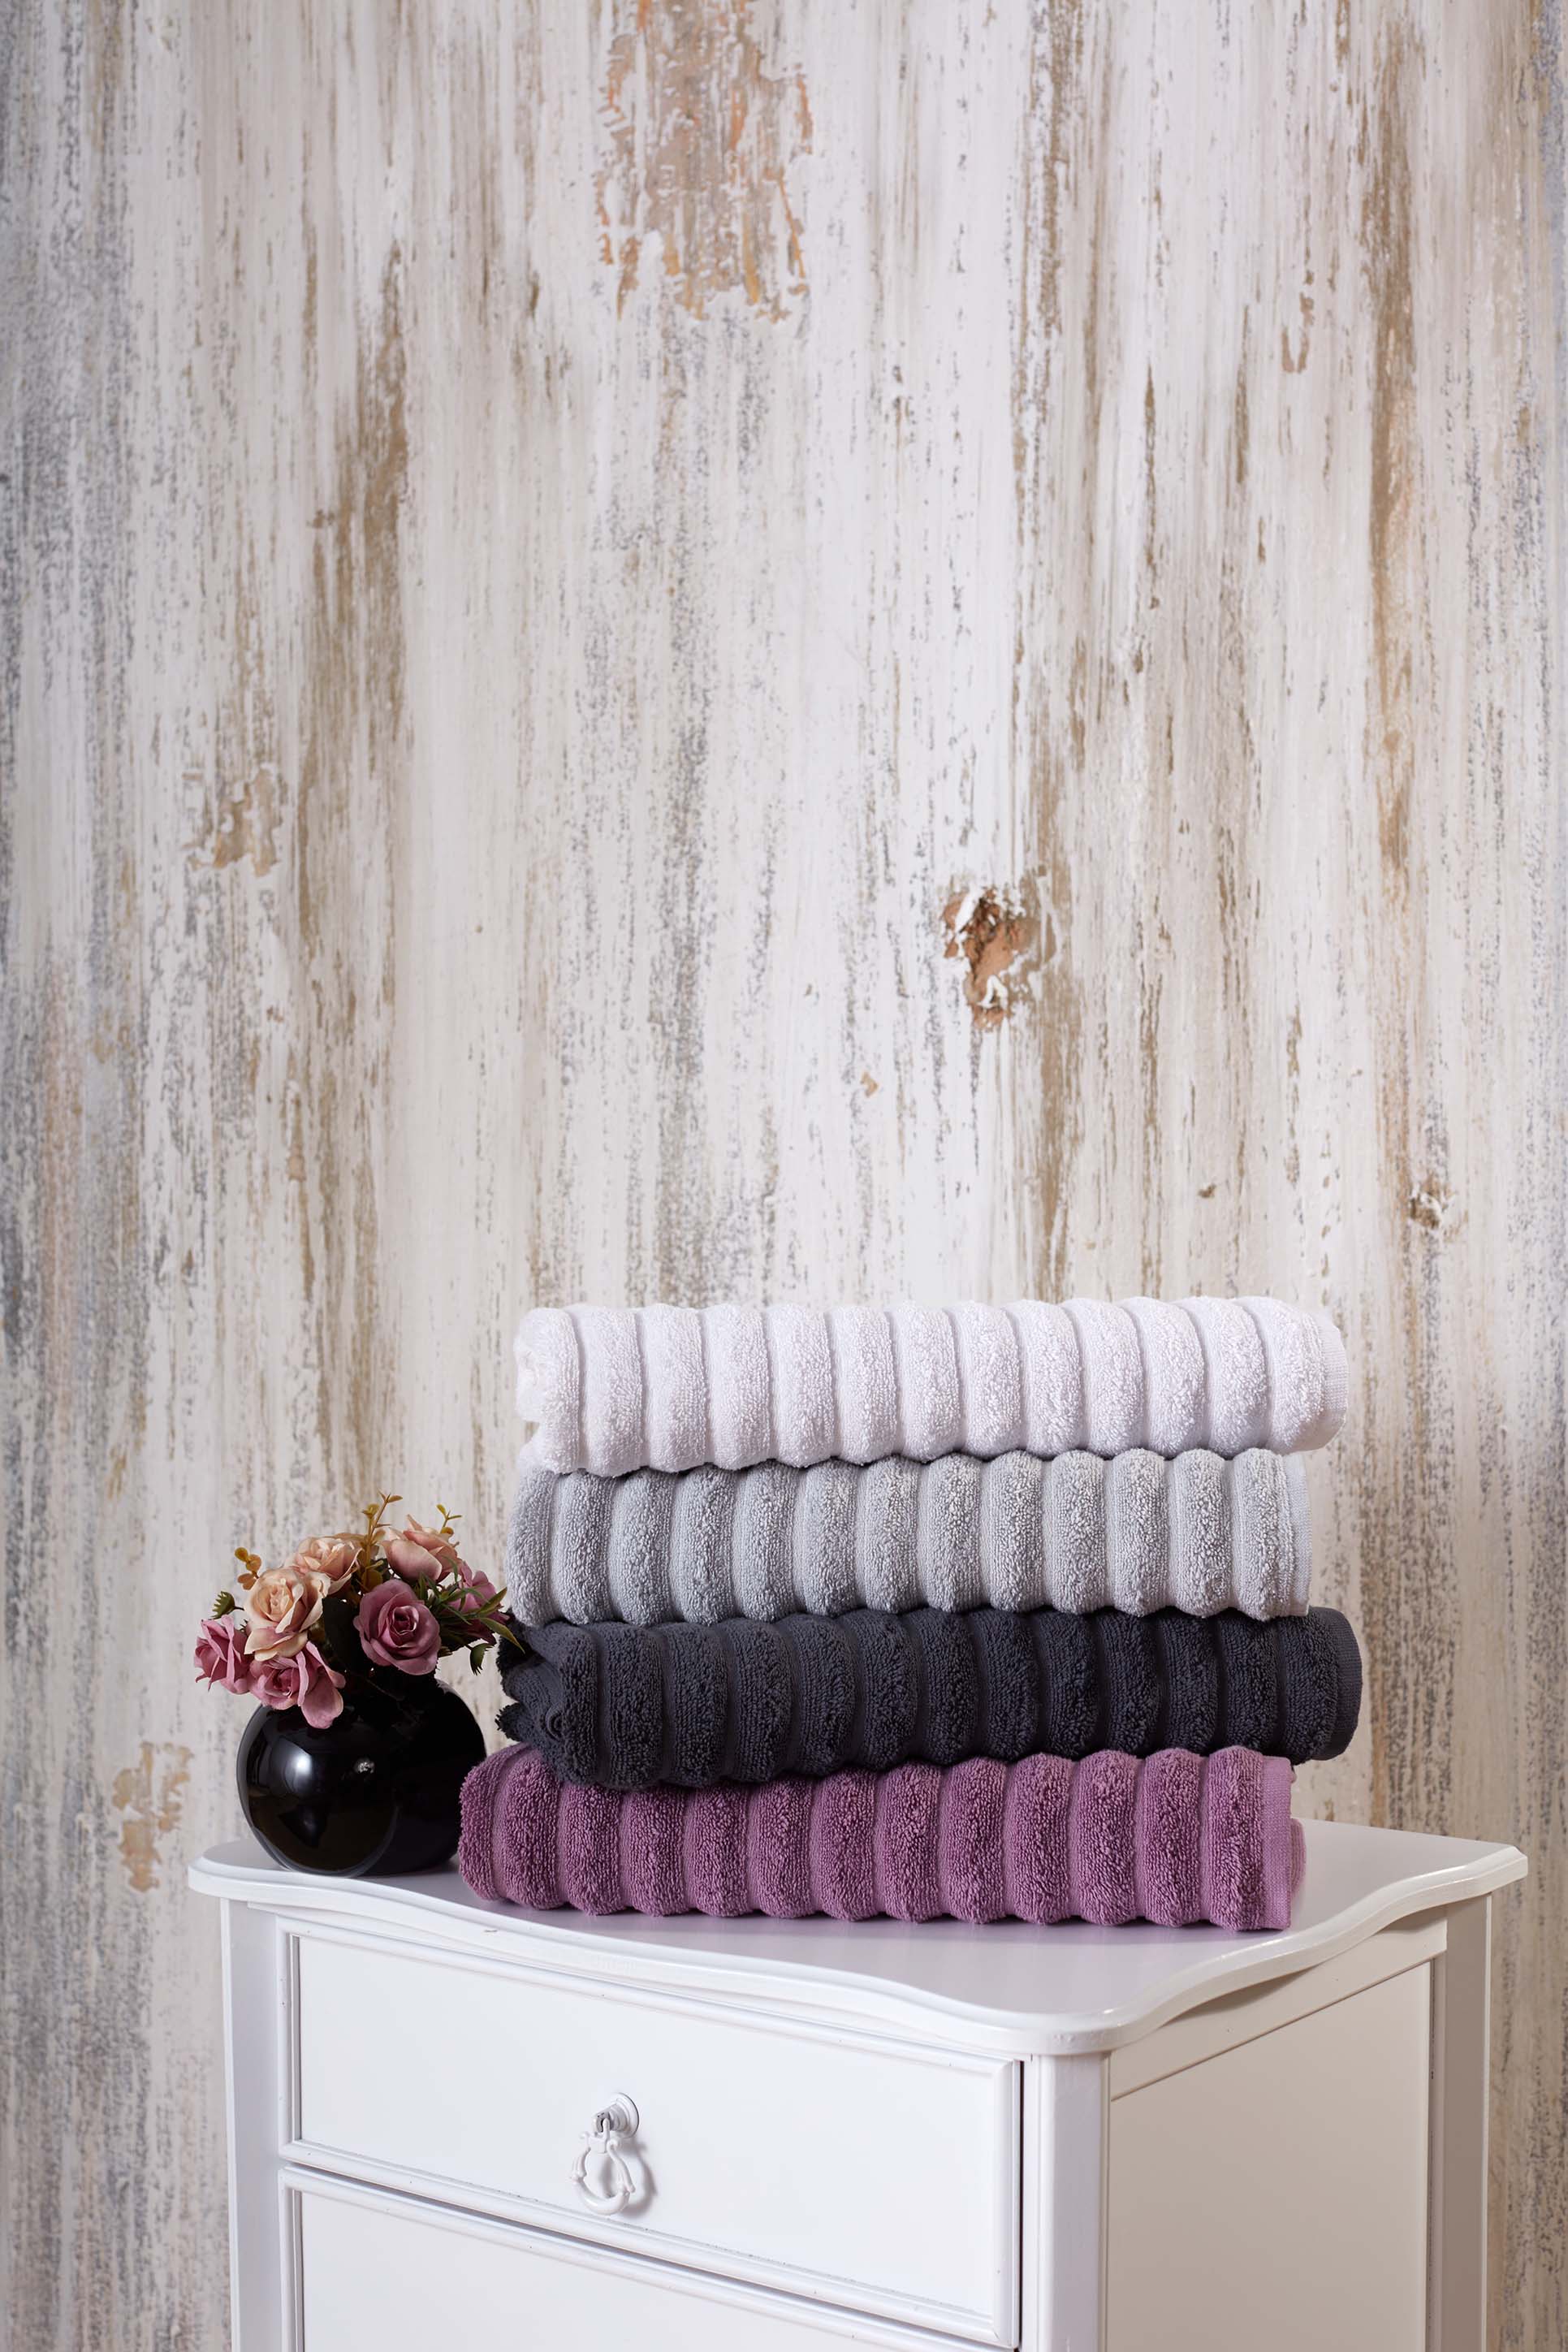 Towels Bathrobes Bathmats manufacturing exporting